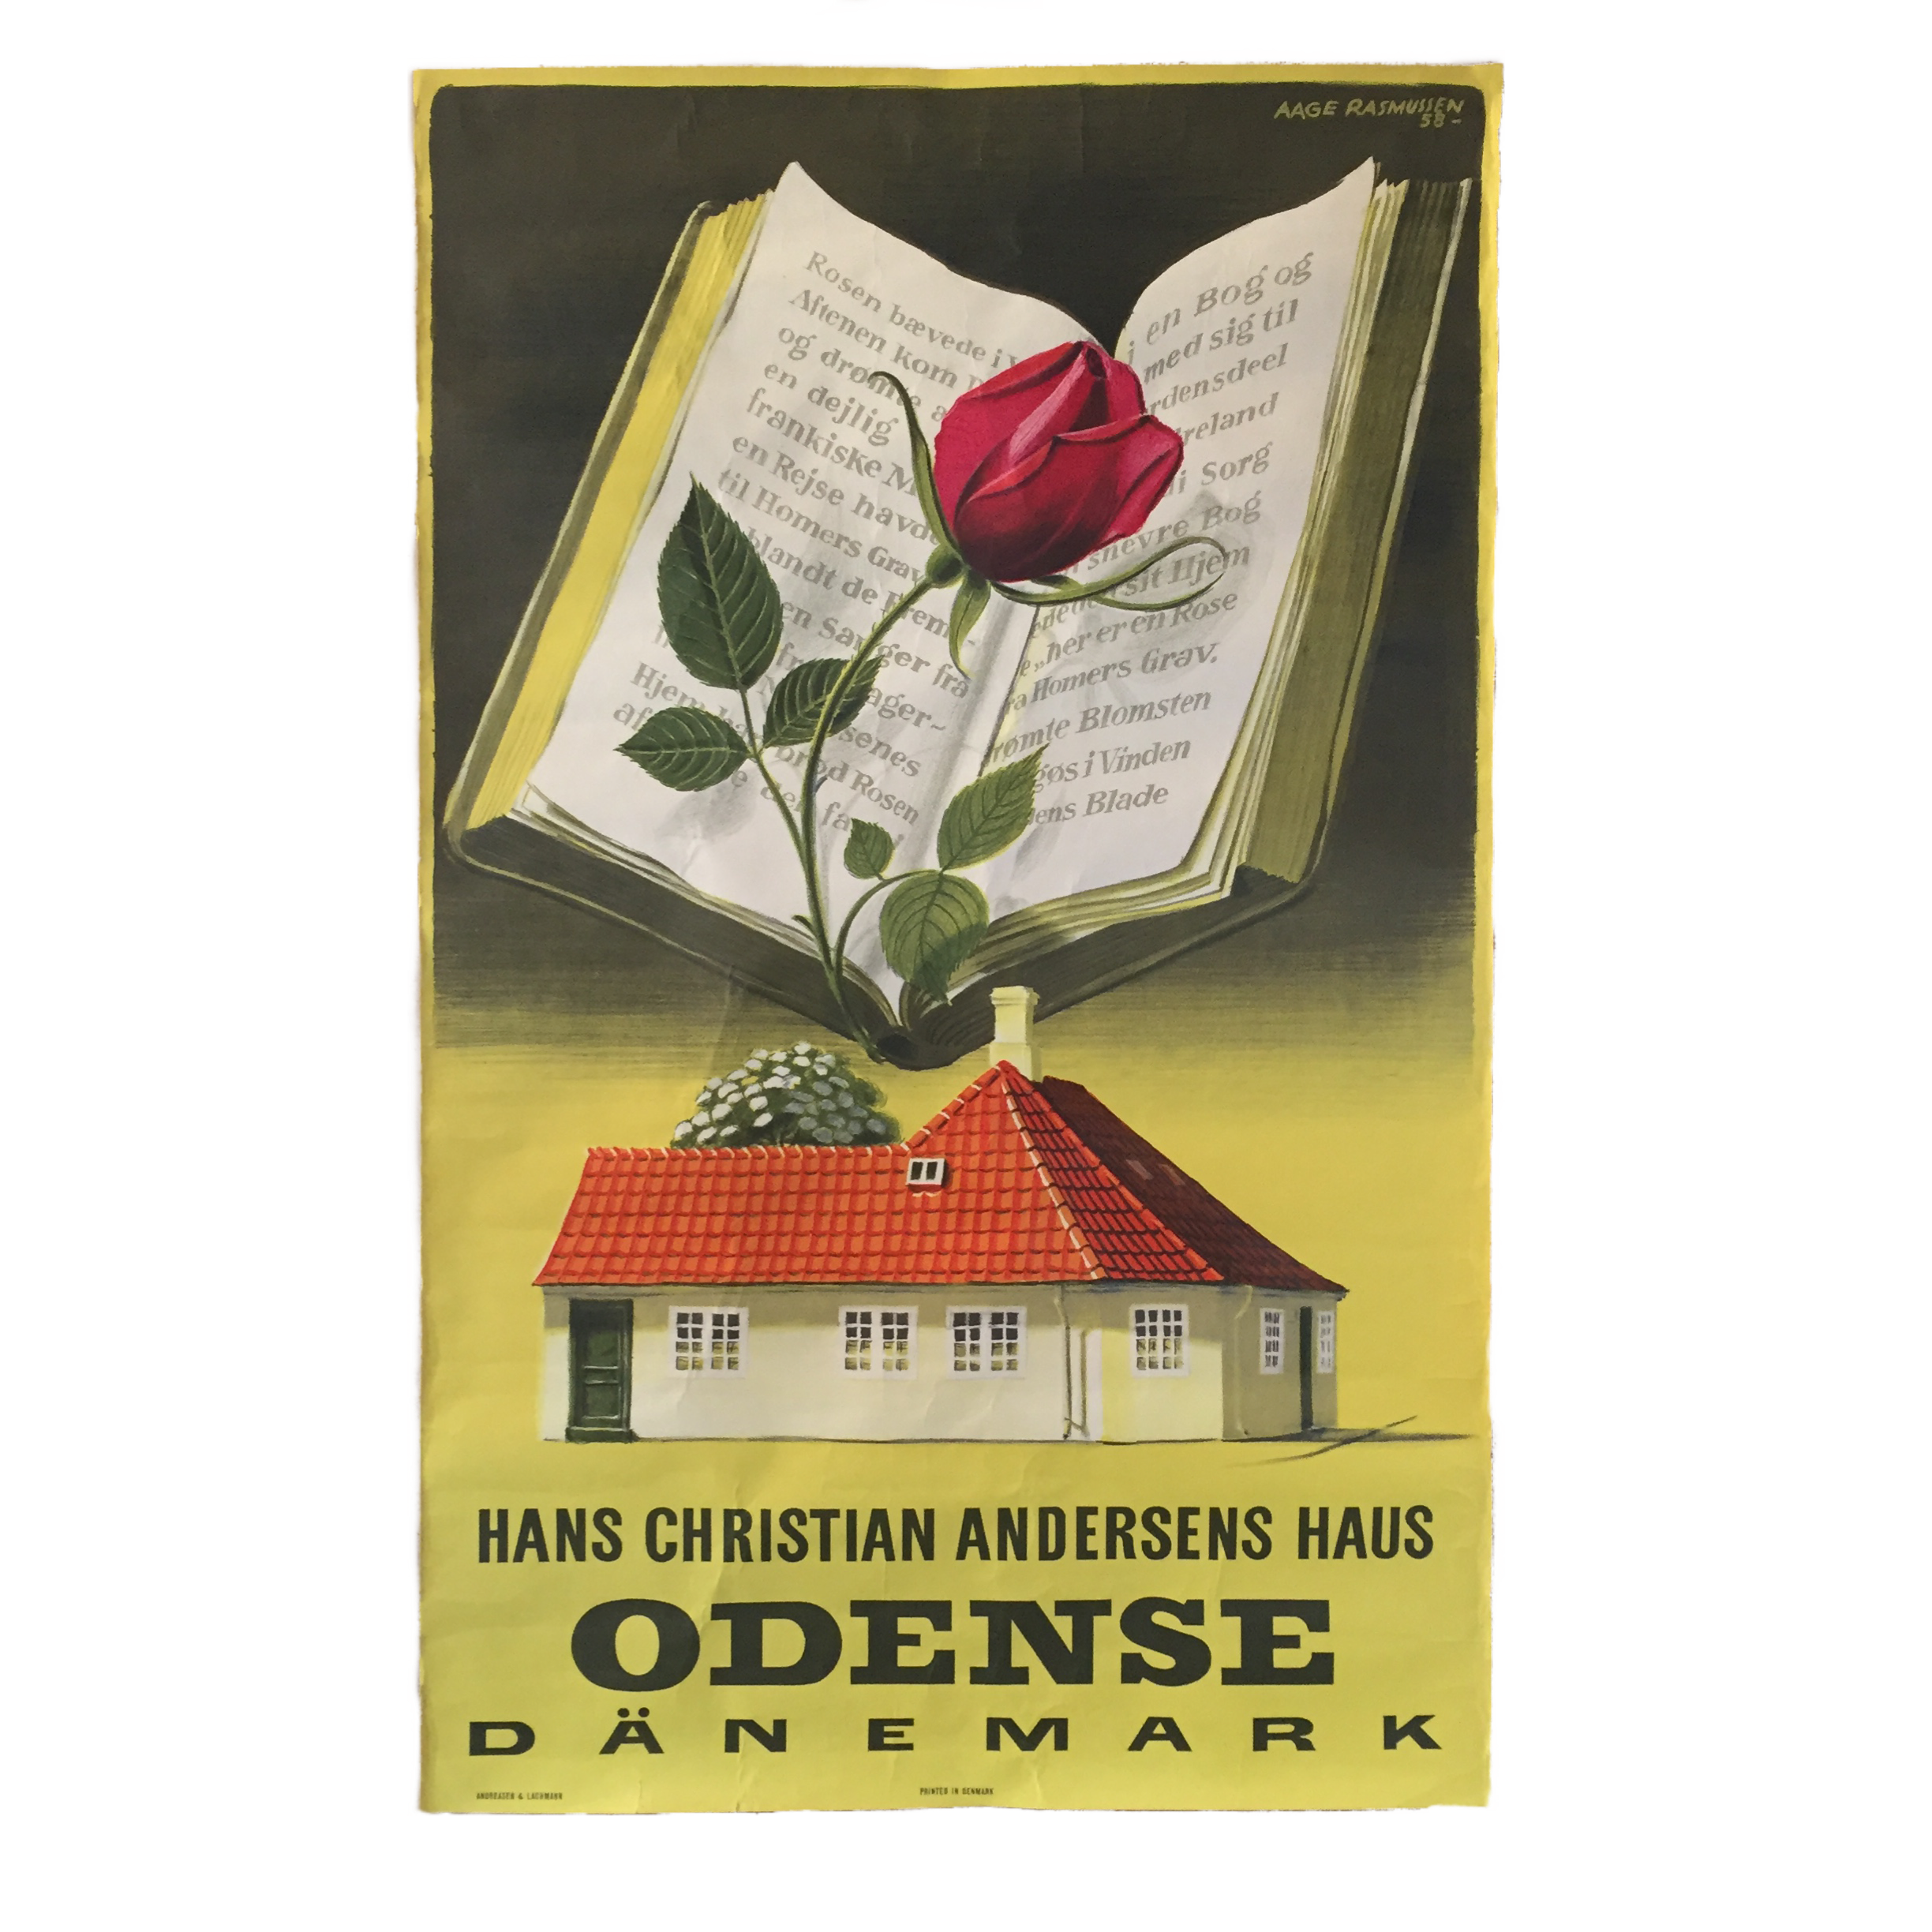 Hans Christian Andersen Poster